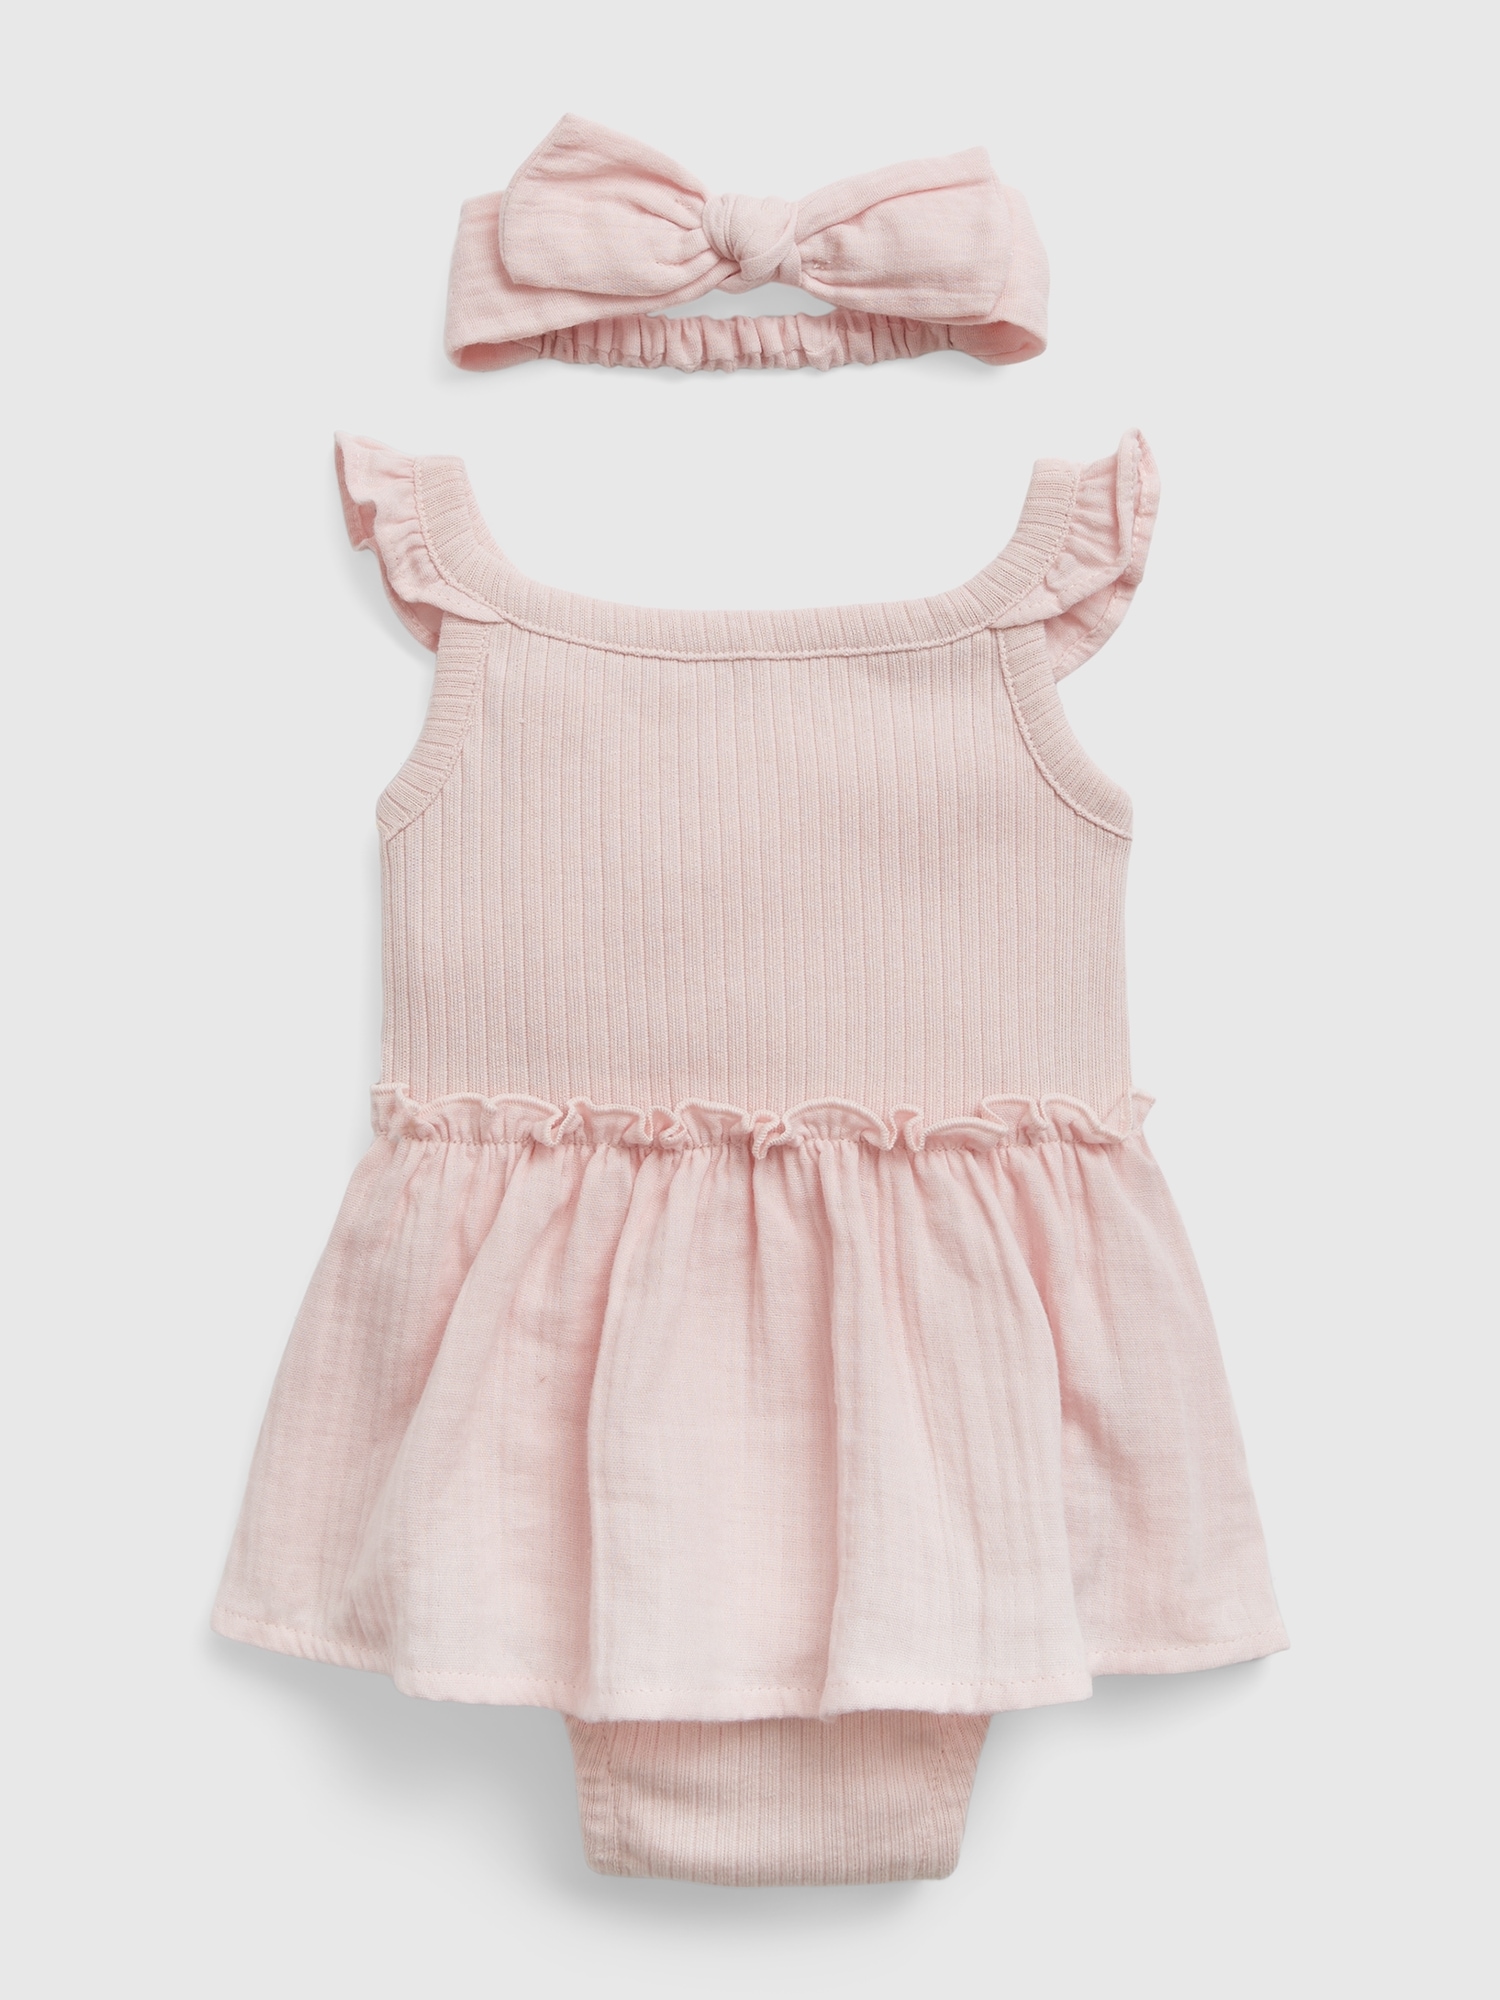 Gap Baby Flutter Skirt Outfit Set